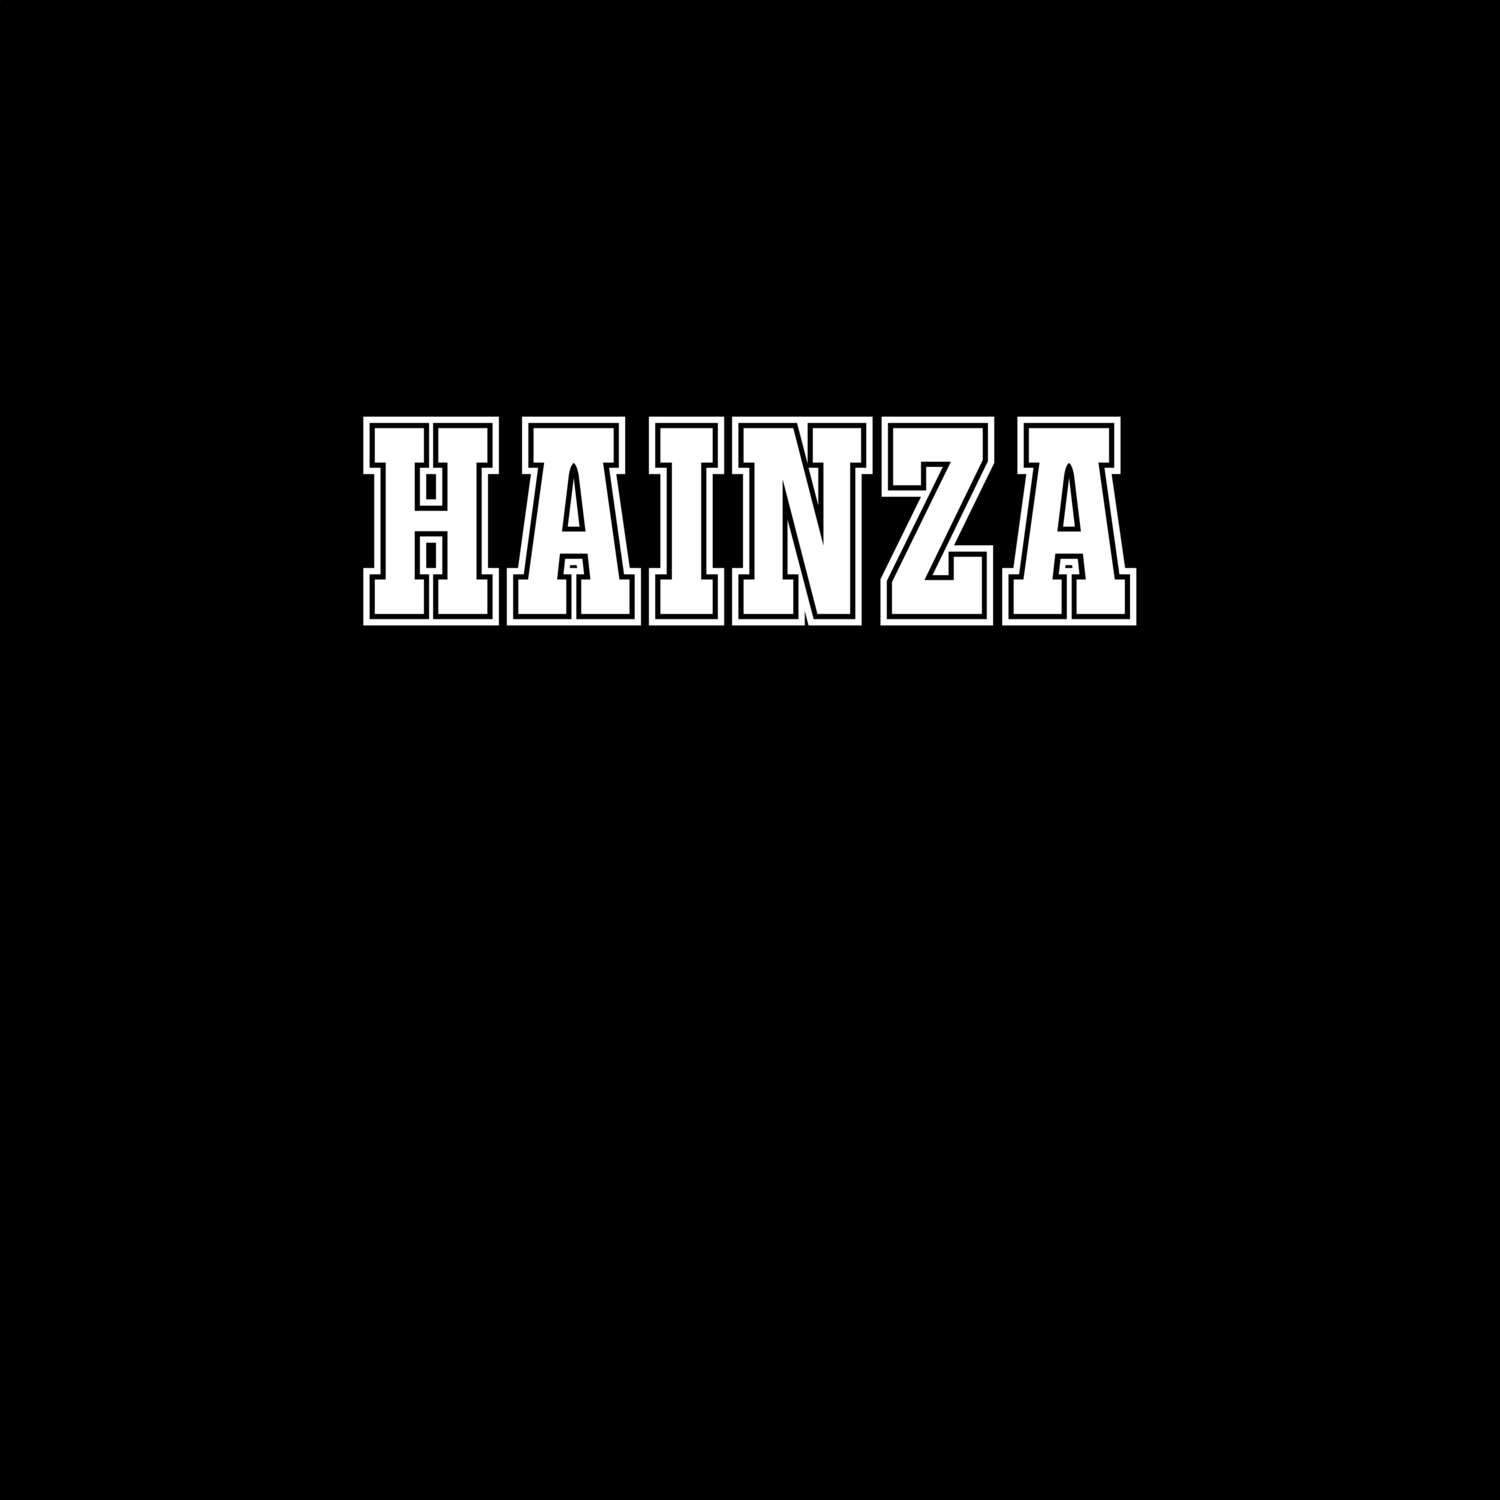 Hainza T-Shirt »Classic«